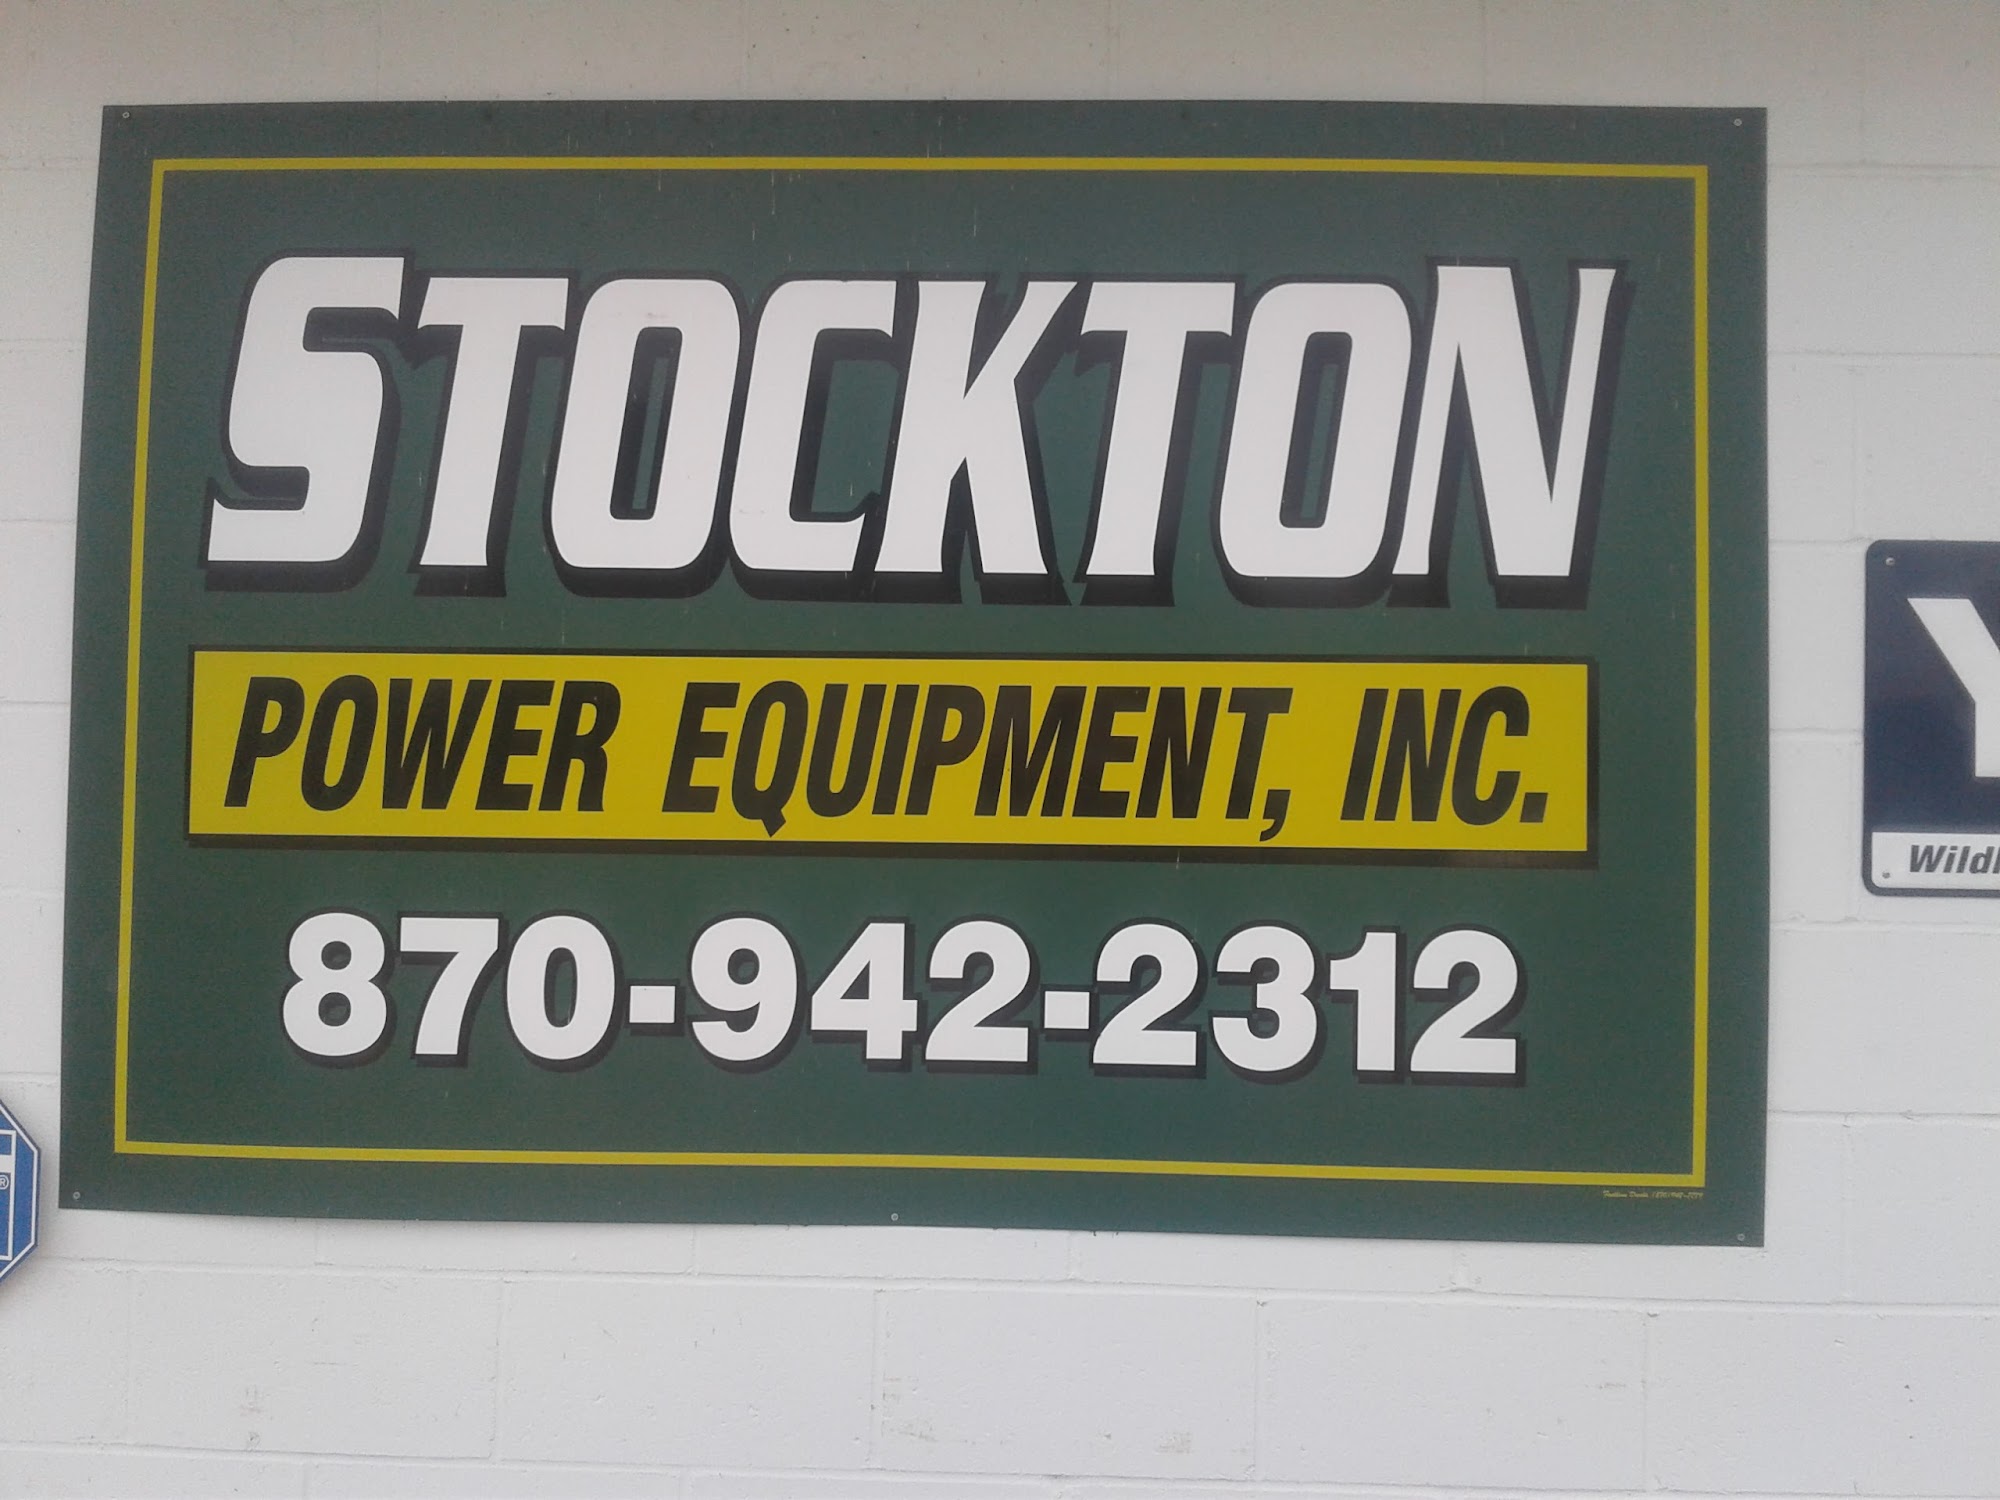 Stockton Power Equipment, Inc. 1001 North Rock St, Sheridan Arkansas 72150